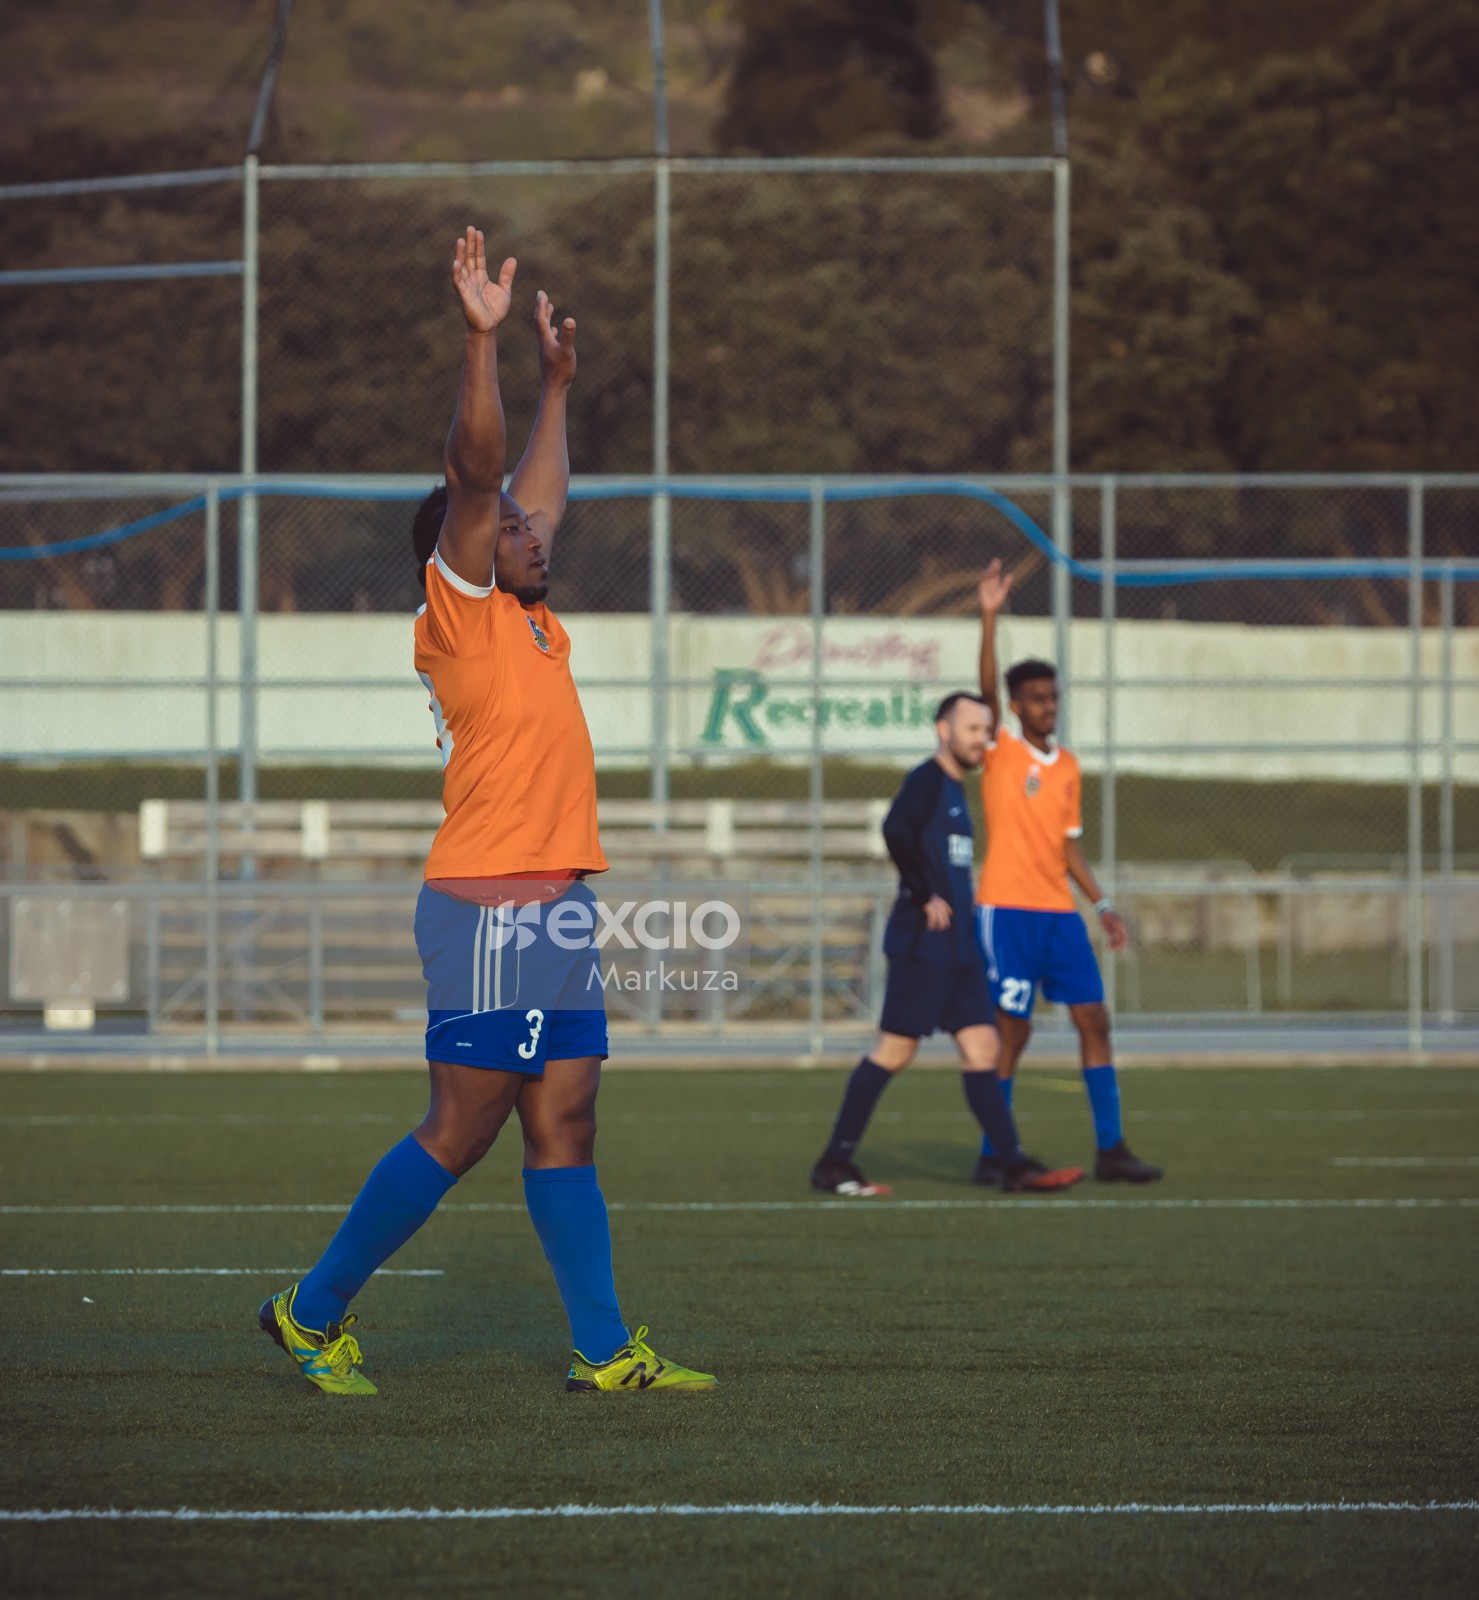 Player in orange Adidas shirt raising both hands - Sports Zone sunday league